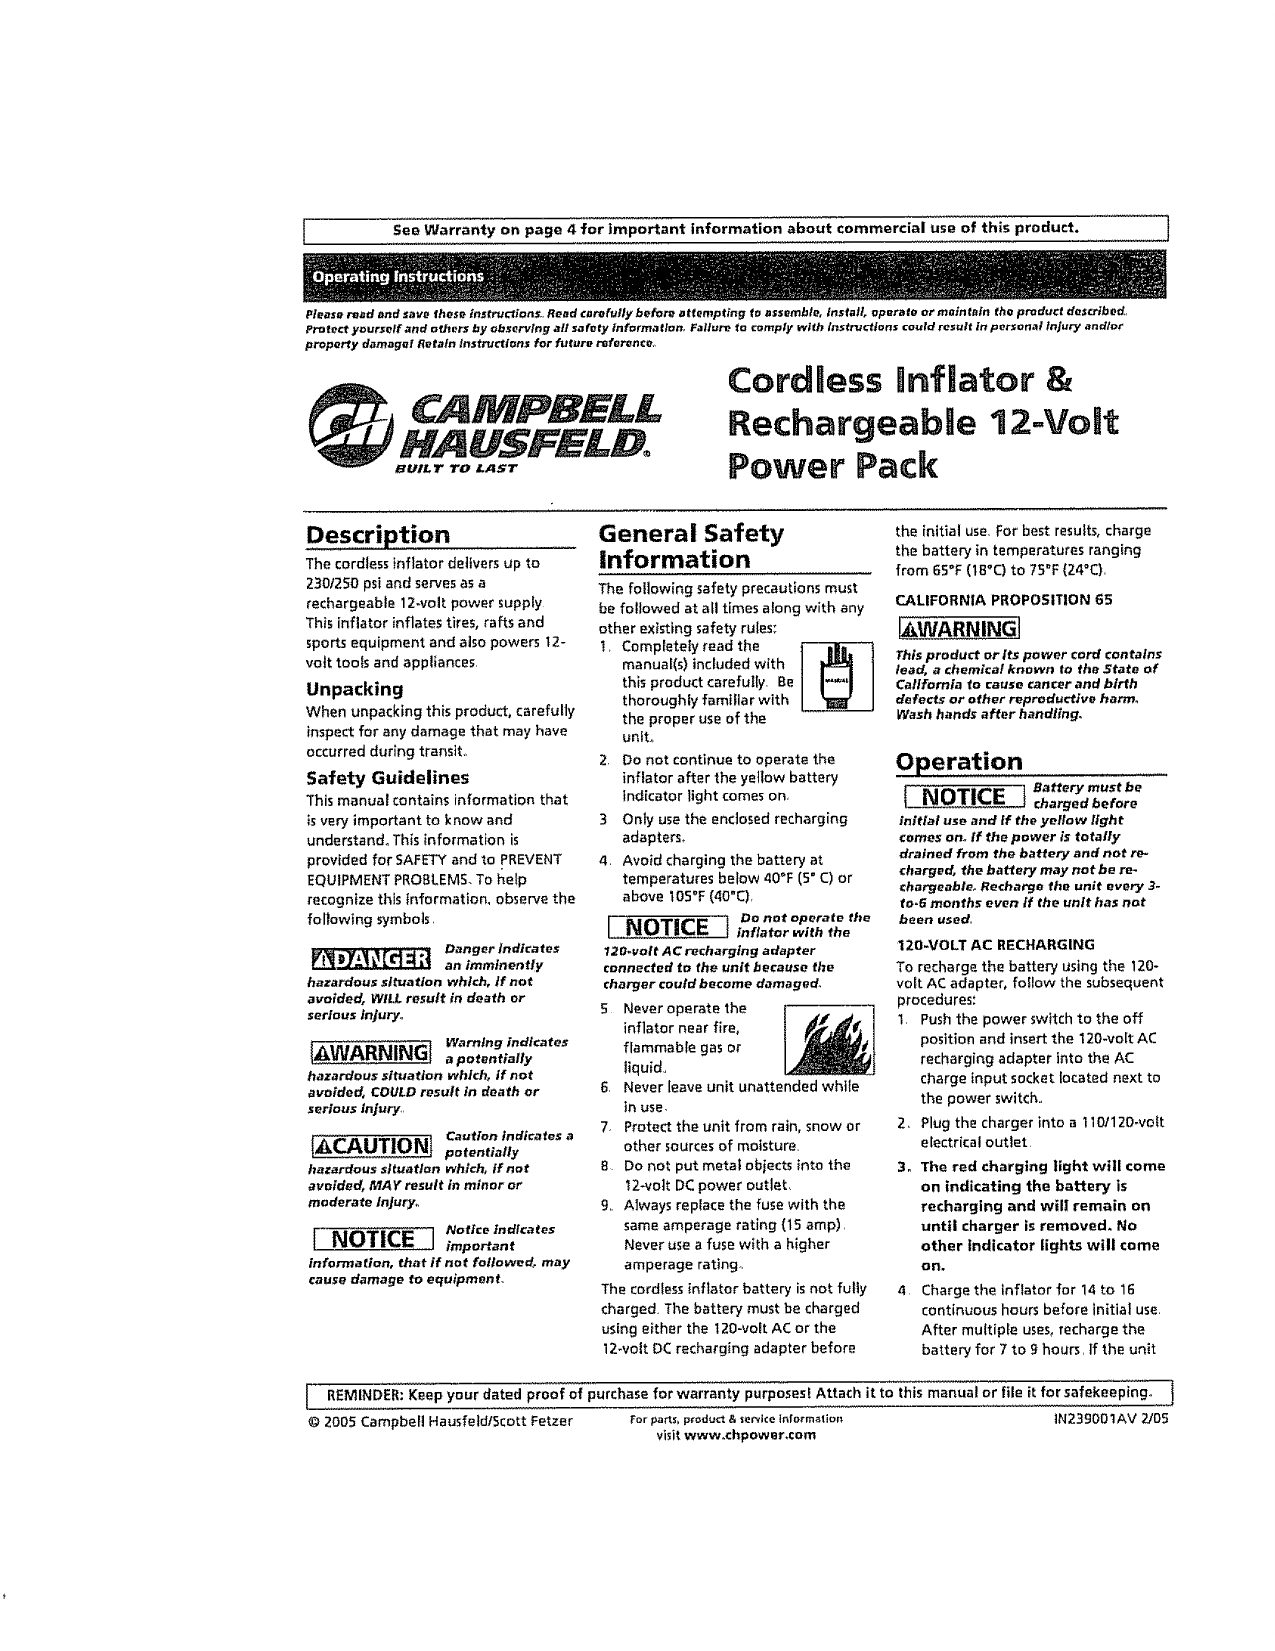 Campbell Hausfeld CC2300 null | Manualzz